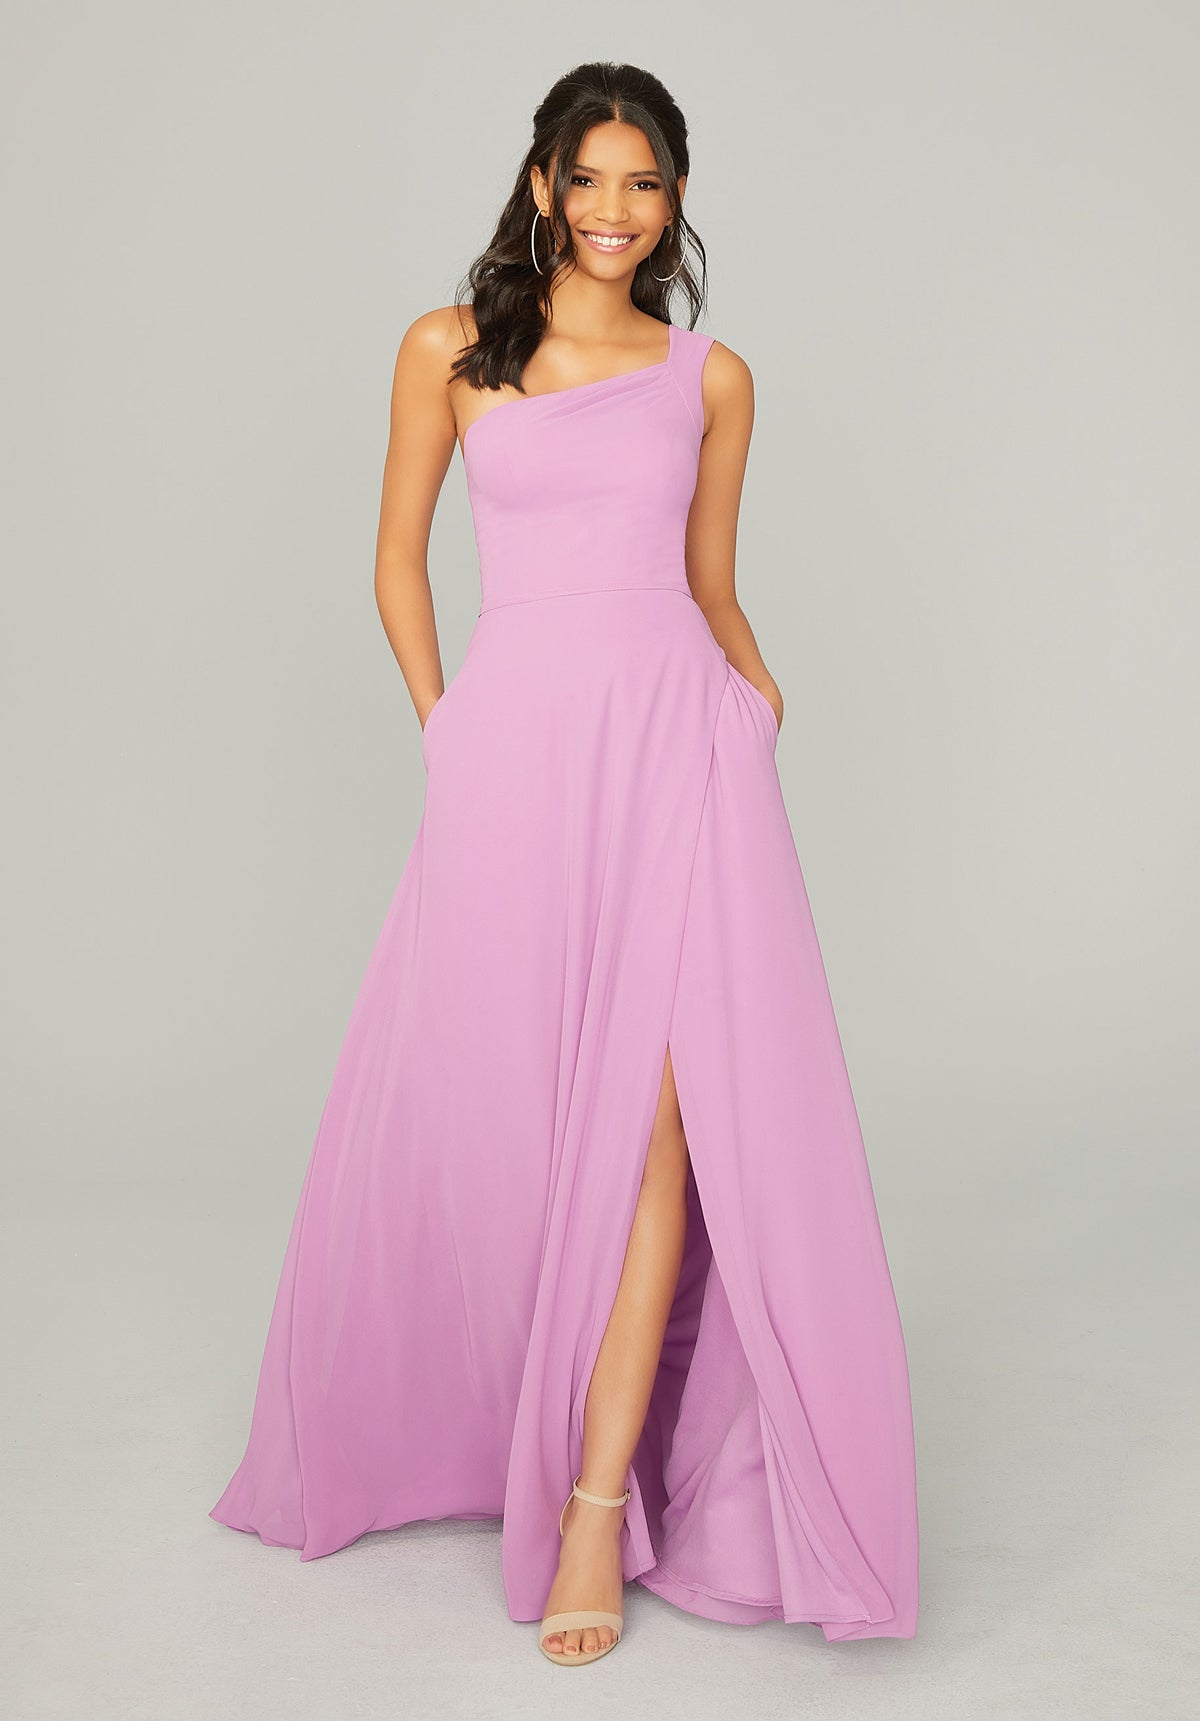 Morilee - 21758 - Cheron's Bridal, Bridesmaids Dress